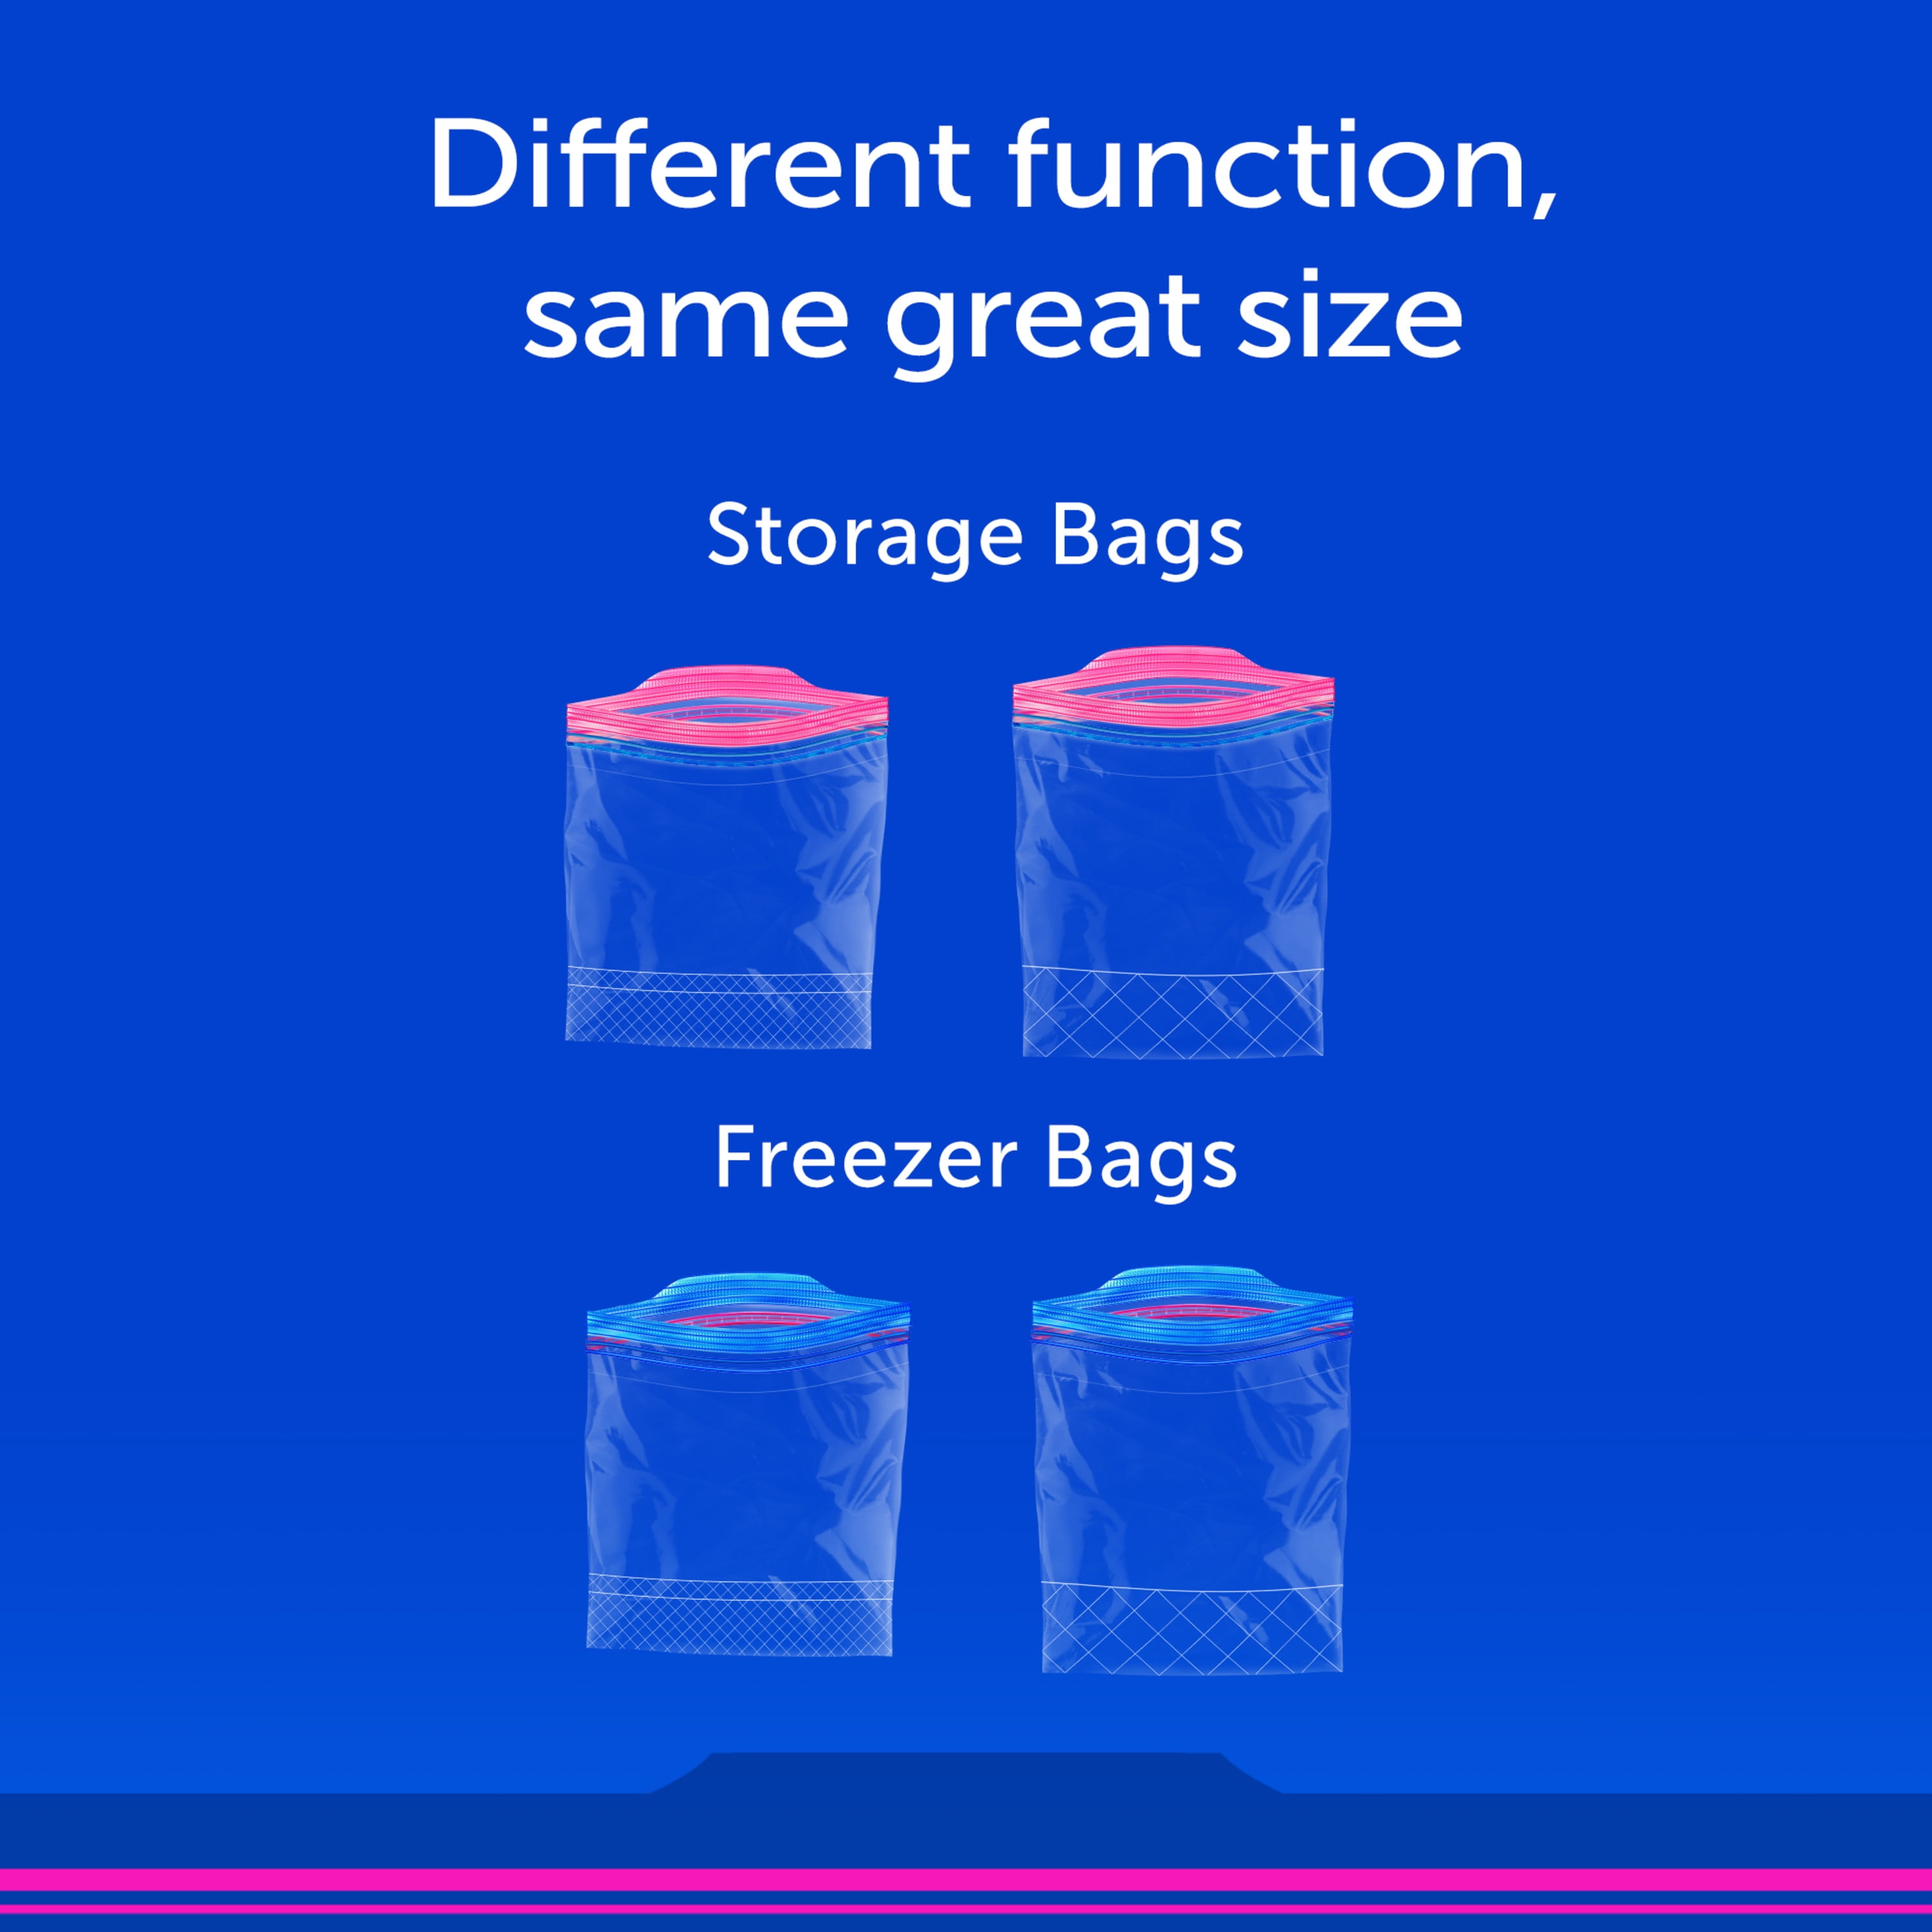 LPT: Make freezer bags larger then normal so you can flatten